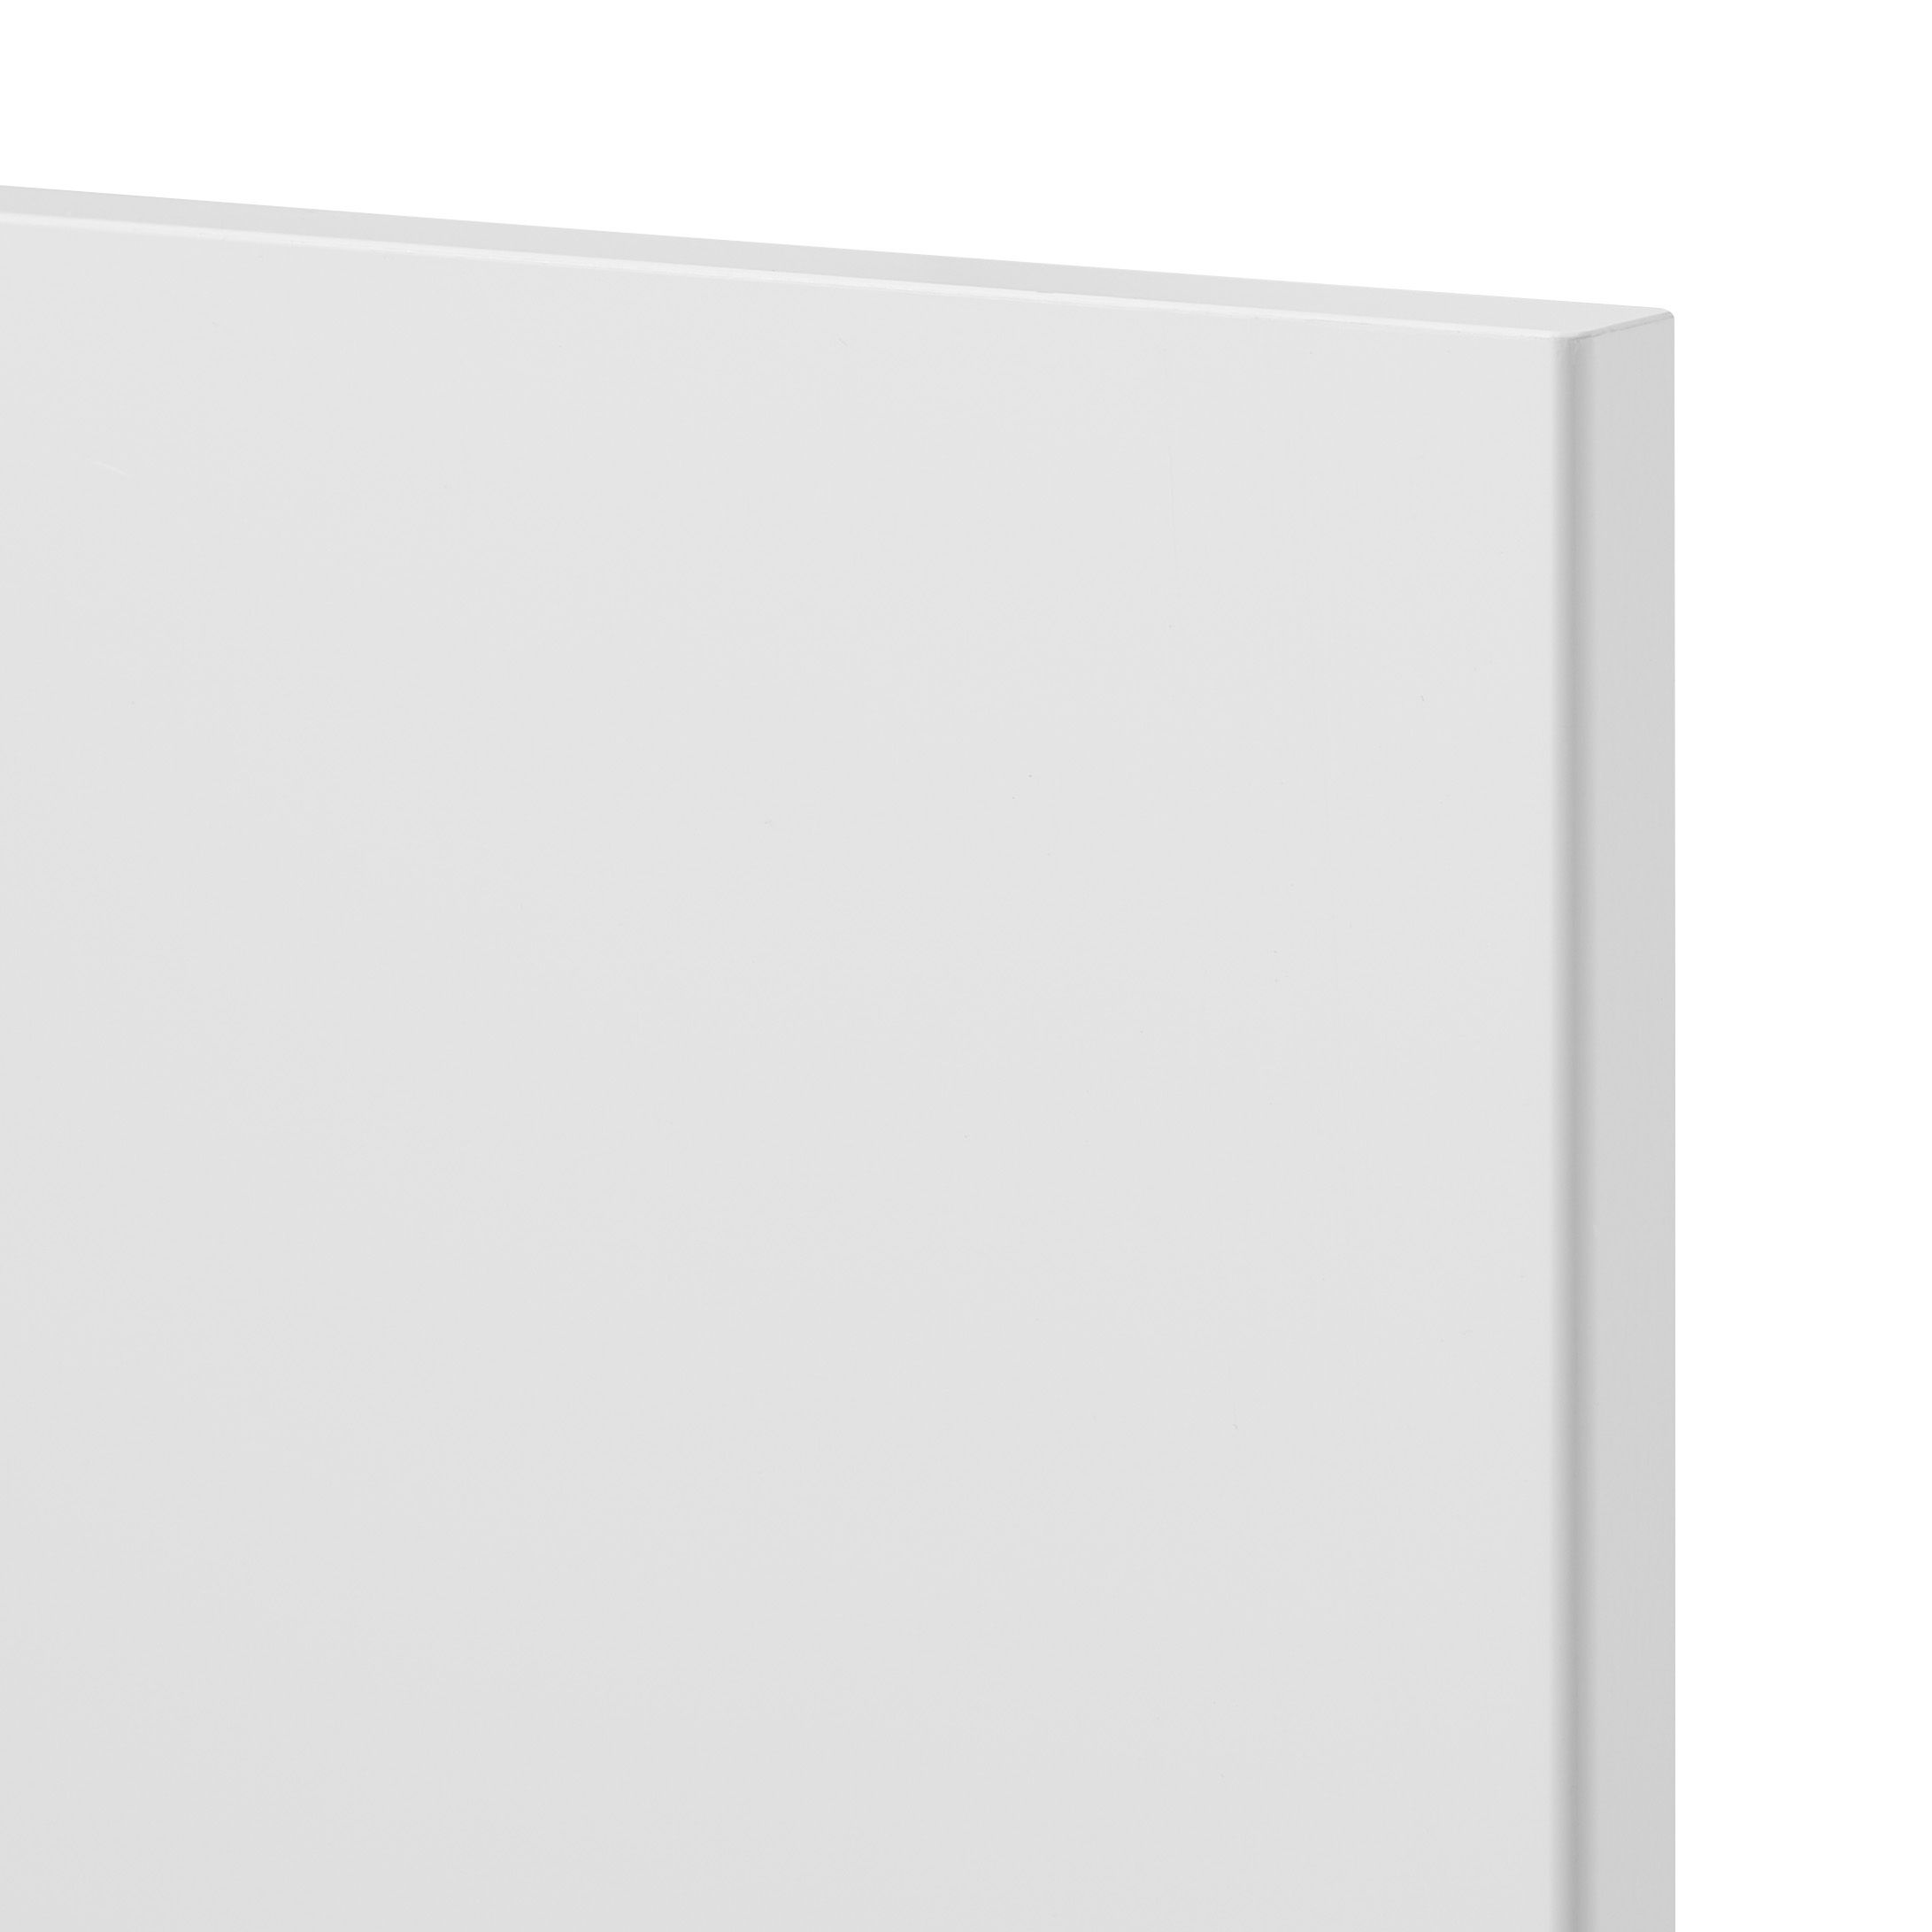 GoodHome Stevia Gloss white Drawer front, bridging door & bi fold door, (W)1000mm (H)356mm (T)18mm